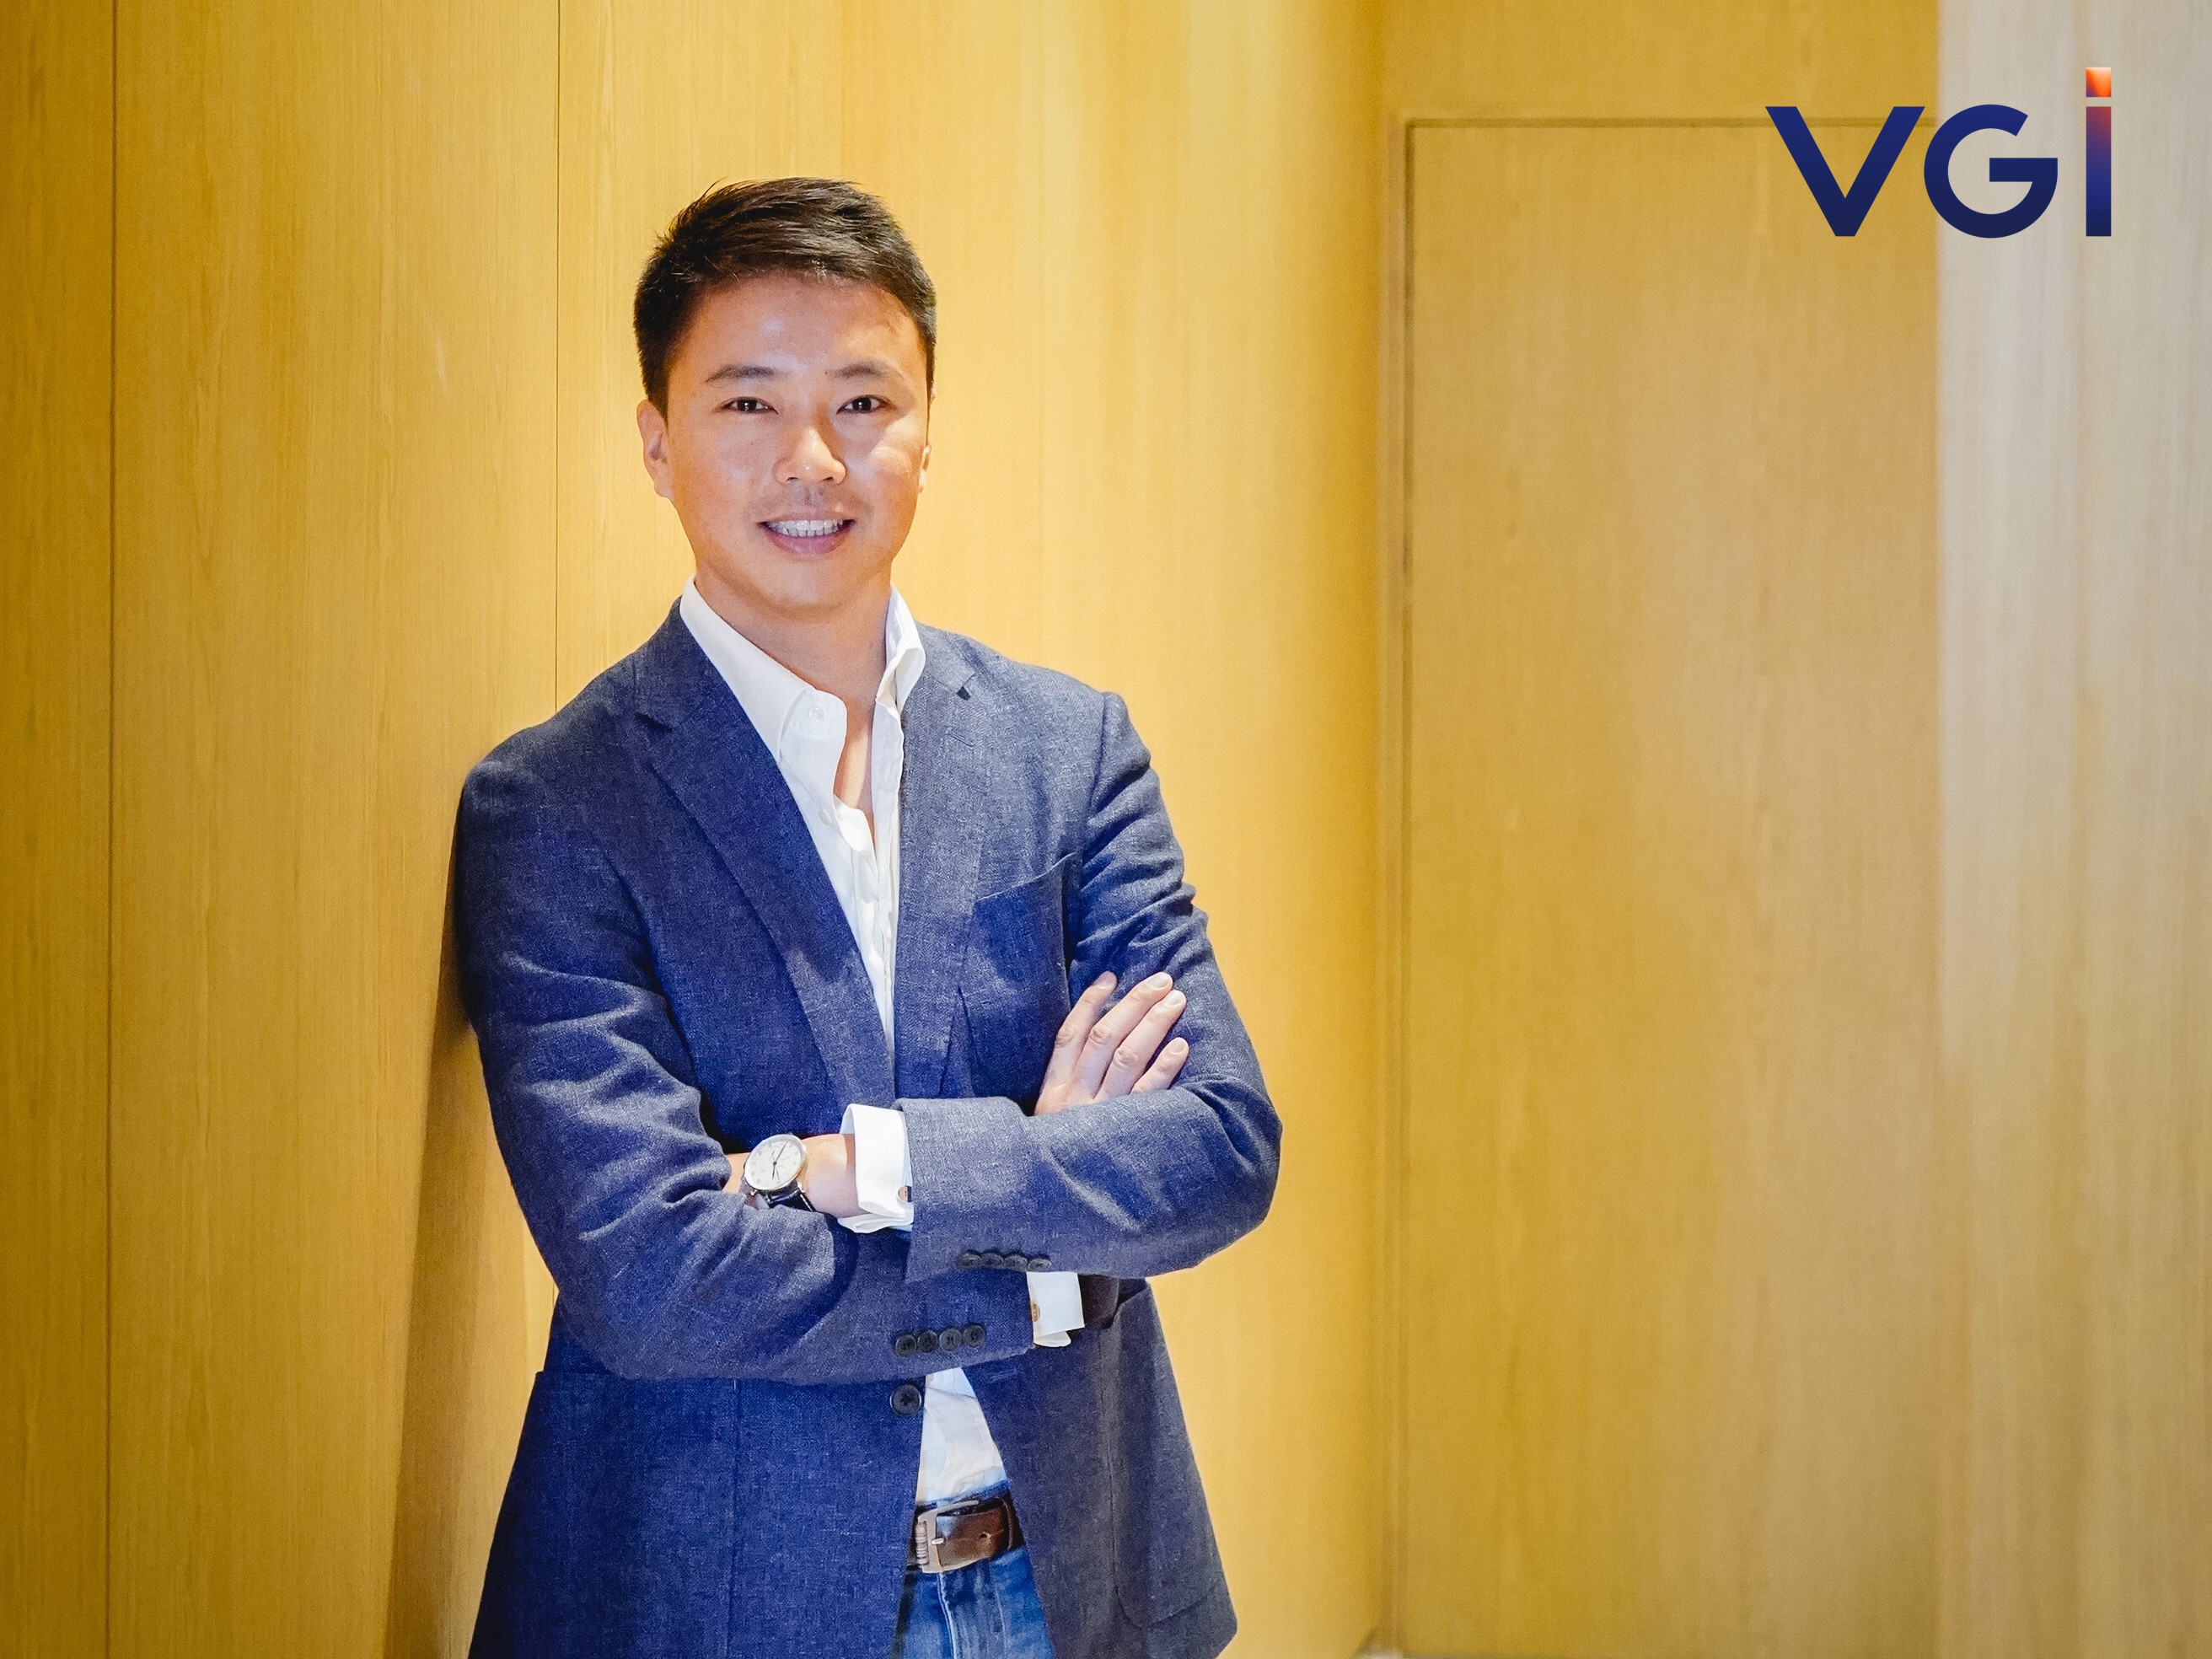 VGI ร่วมทุน iClick Interactive จัดตั้งบริษัทเทคโนโลยีด้านการตลาด เพิ่มขีดความสามารถในการบริหารการตลาดแบบดิจิทัลที่กำลังเติบโตของประเทศไทย และเชื่อมต่อแบรนด์ในเอเชียตะวันออกเฉียงใต้เข้ากับโอกาสทางธุรกิจจากประเทศจีน